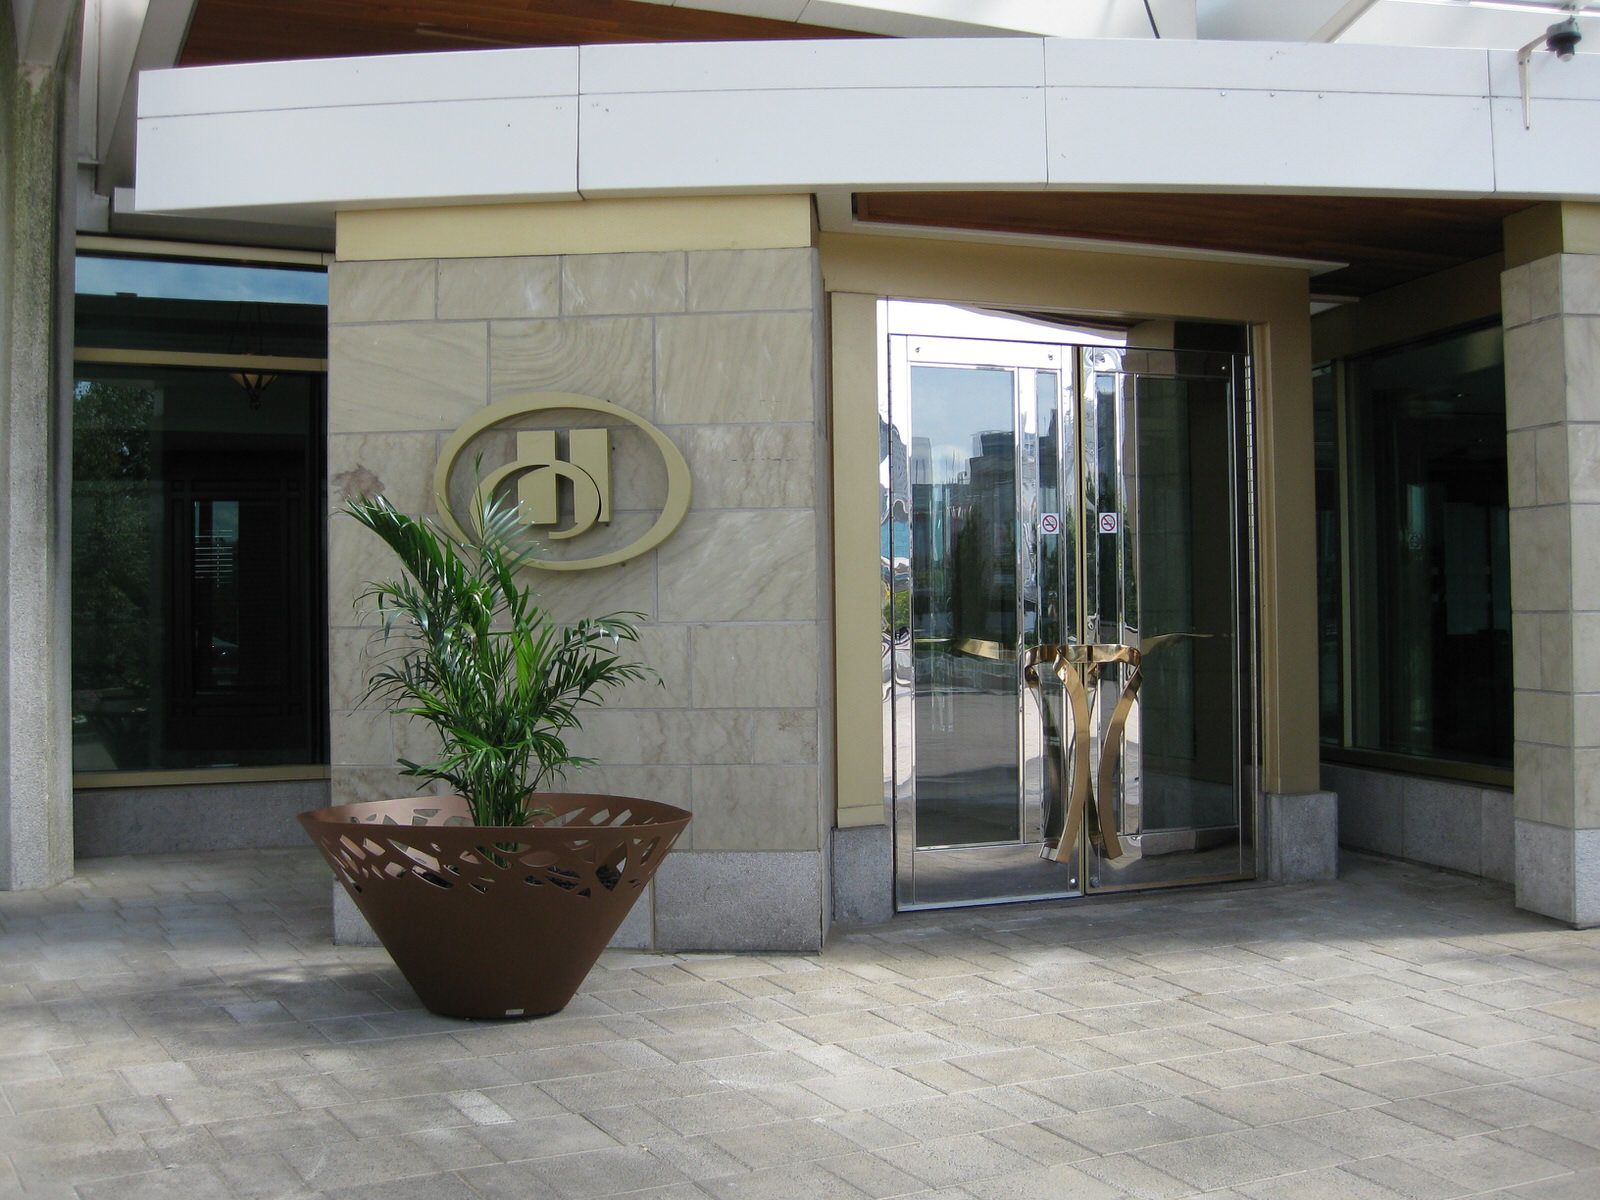 crossed fioriera arredo urbano LAB23 - Hotel Hilton, CANADA